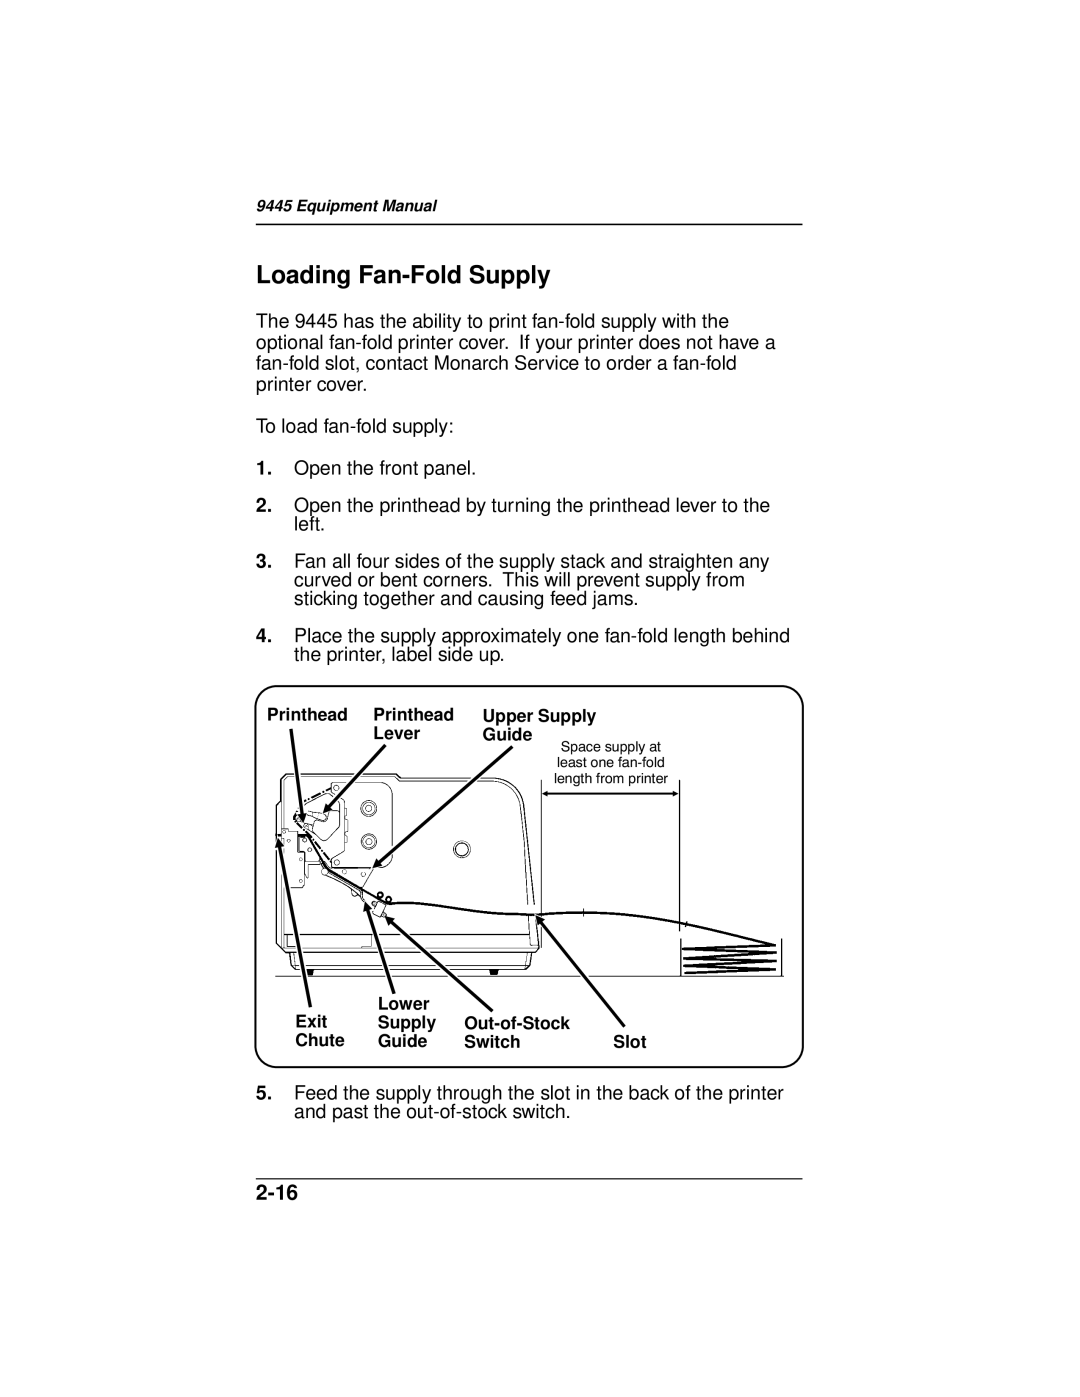 Paxar 9445 manual Loading Fan-Fold Supply, 2-16 